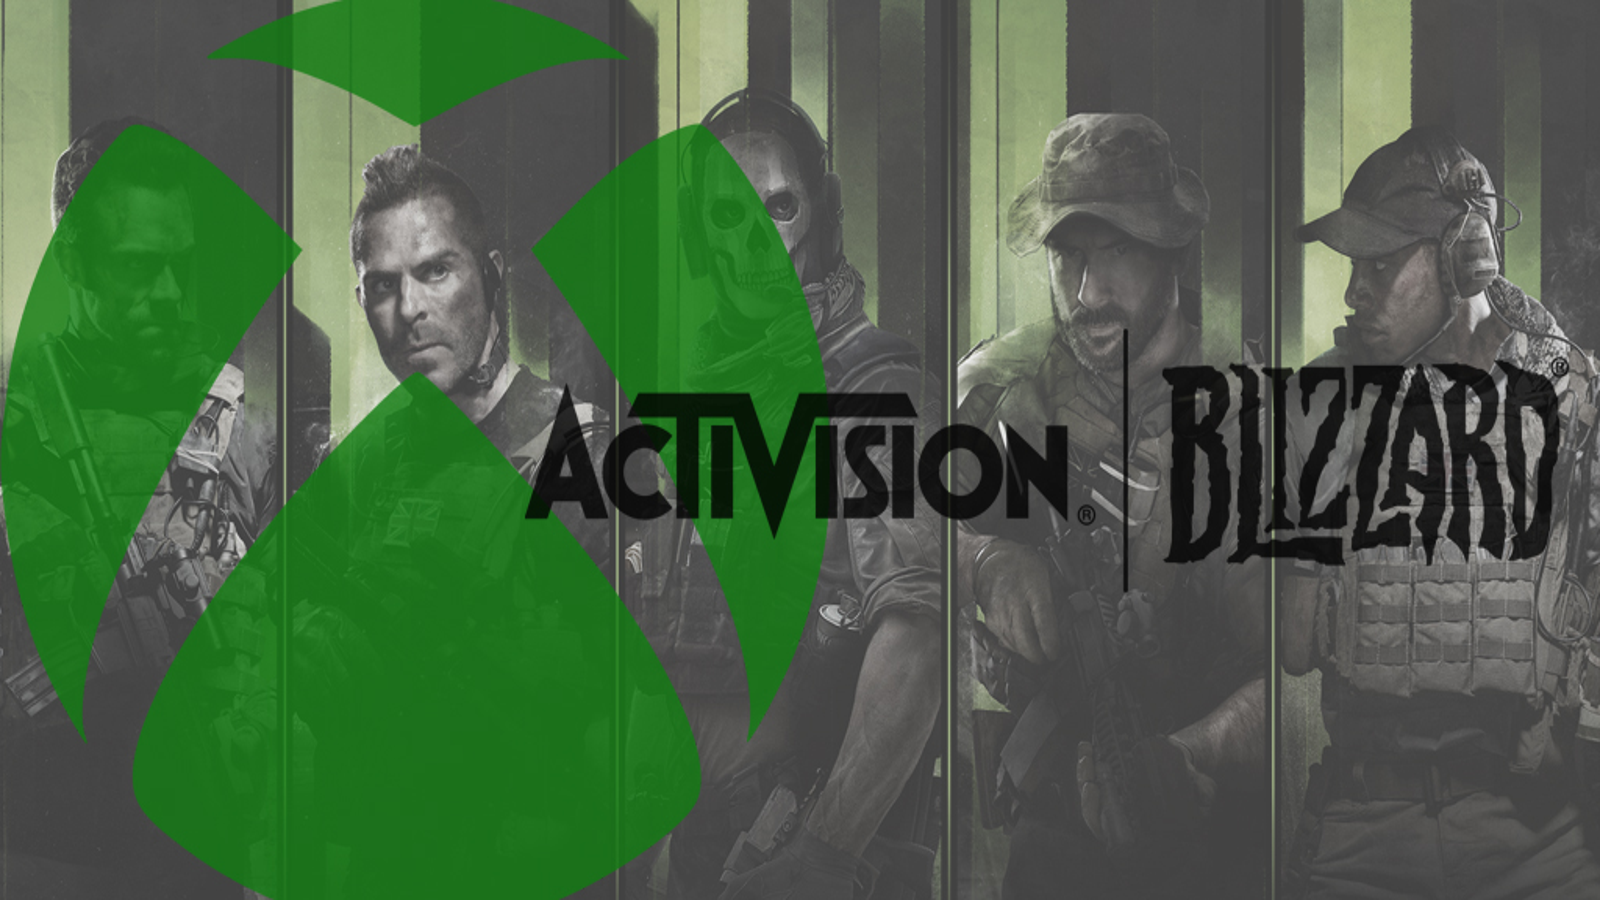 Microsoft Closes Acquisition of Activision Blizzard